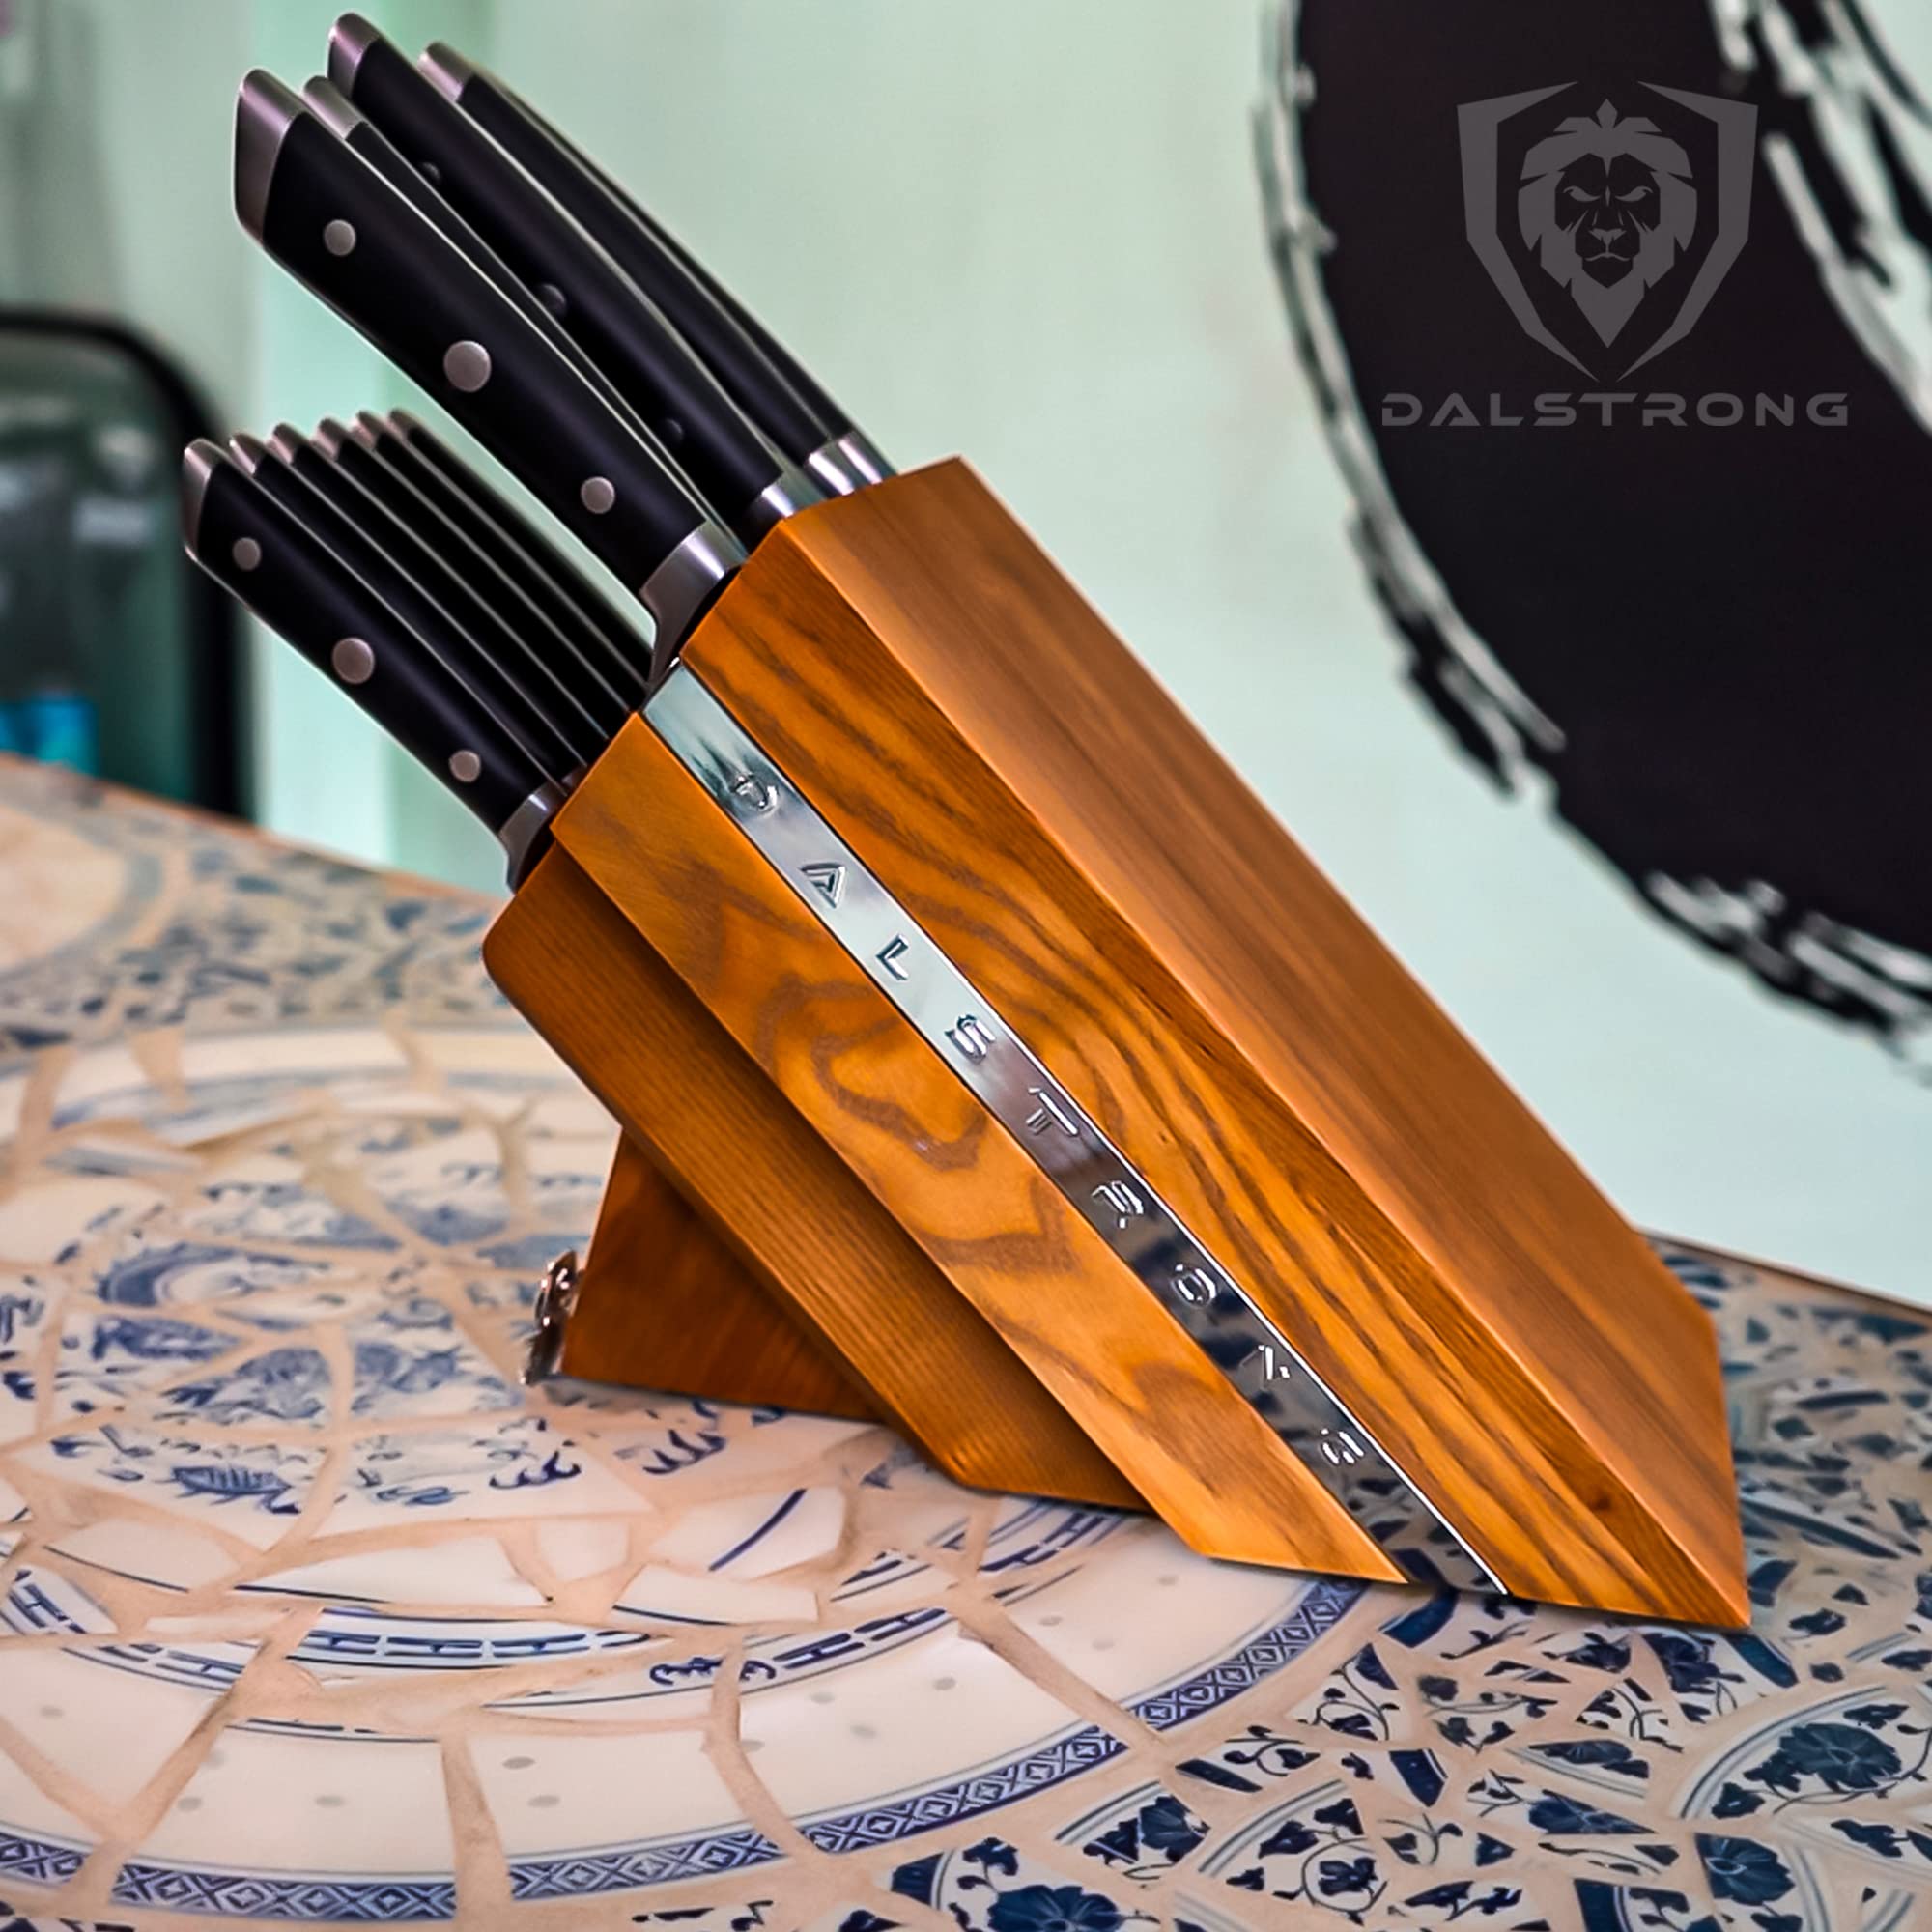 Dalstrong 12-Piece Knife Block Set - Gladiator Series Elite - Black Handles - German HC Steel - Hand-Made Manchurian Ash Wood Block - NSF Certified